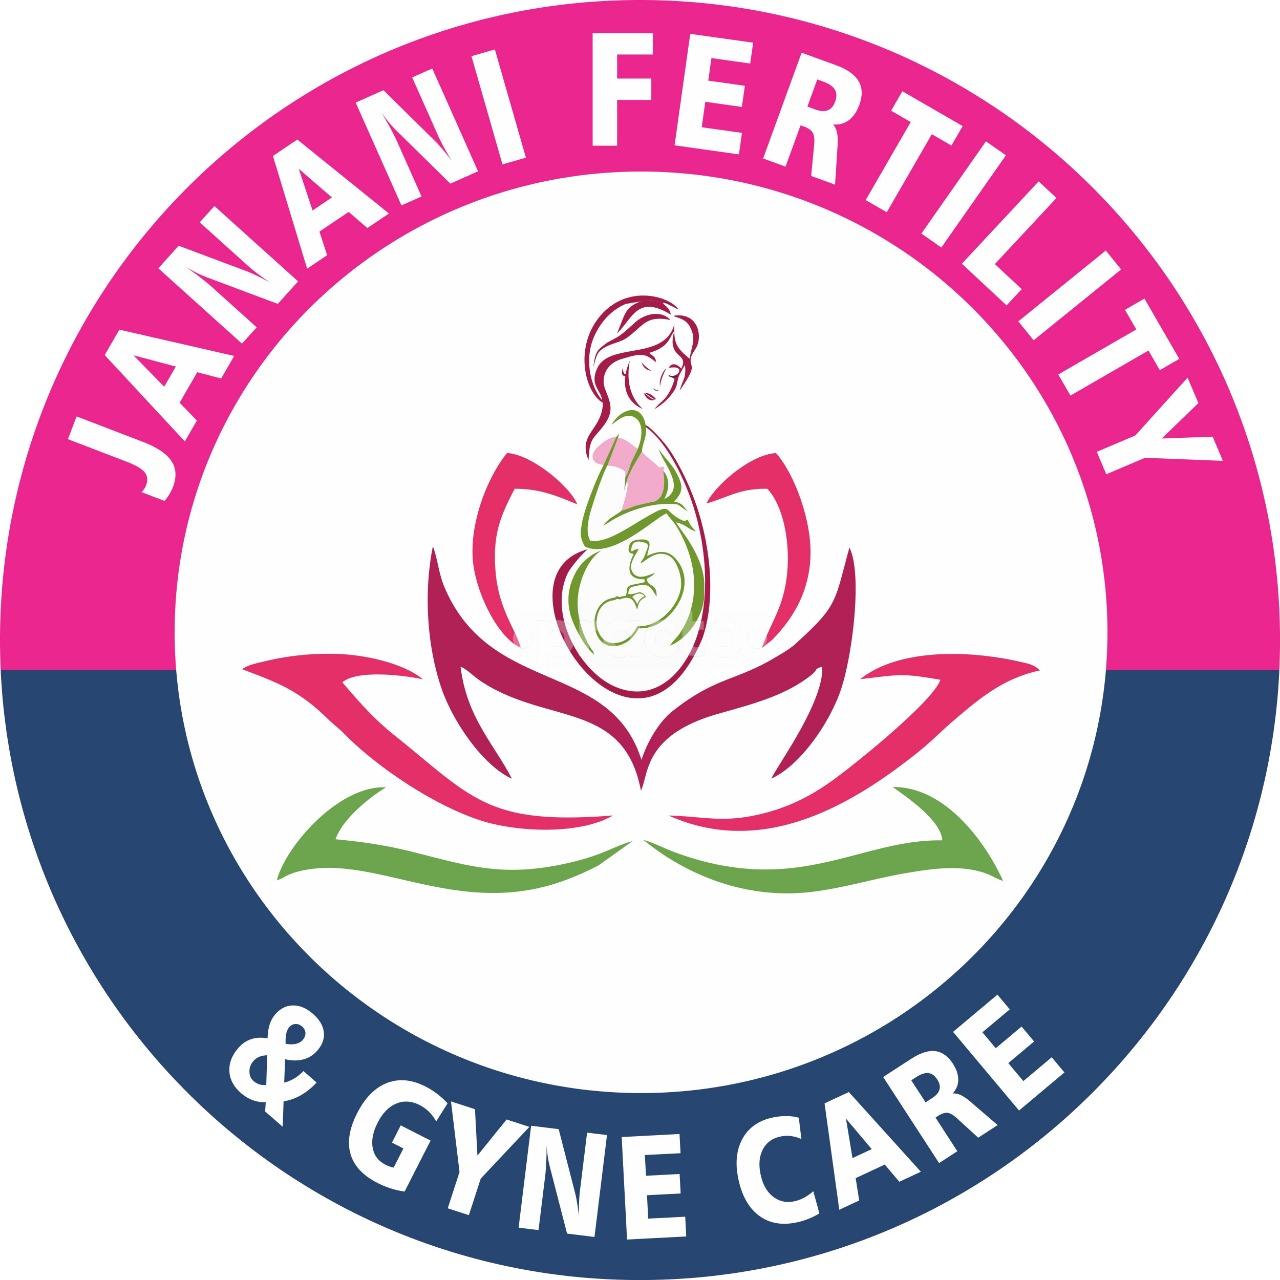 Best Gynecologist in Marathahalli Bangalore | Lady Gynecologist in kundalahalli Bangalore – Dr Jyothi Patil